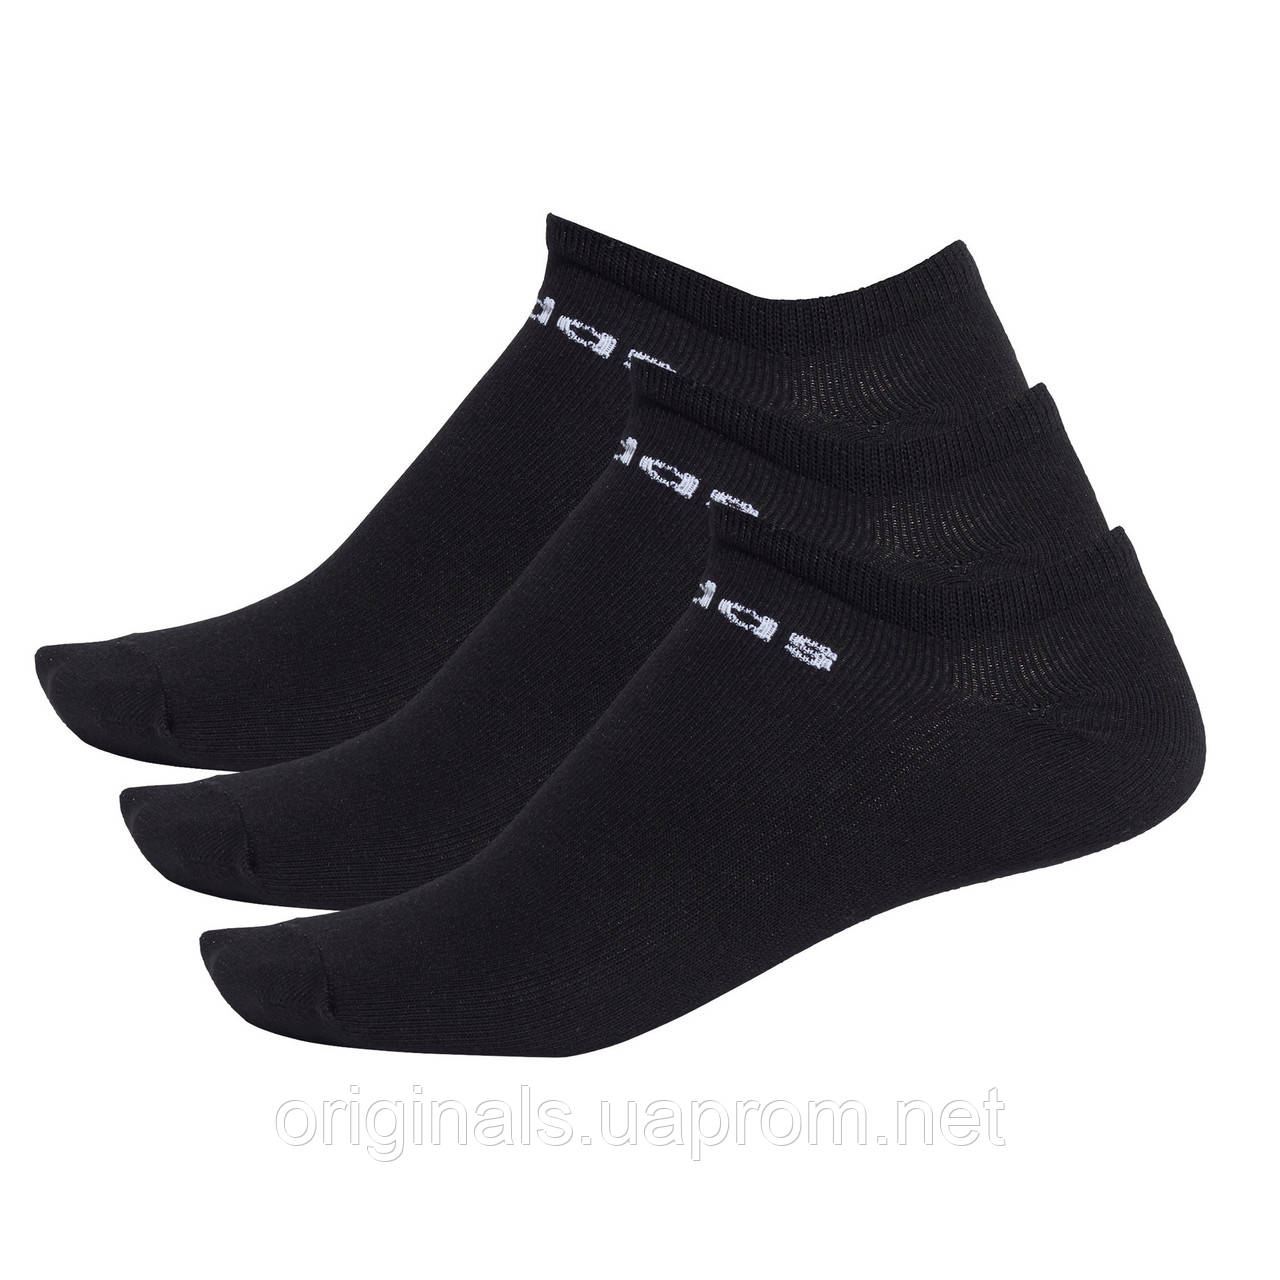 Носки Adidas Thin Ankle Socks 3 Pairs, цена 450 грн., купить в Киеве —  Prom.ua (ID#1007568670)